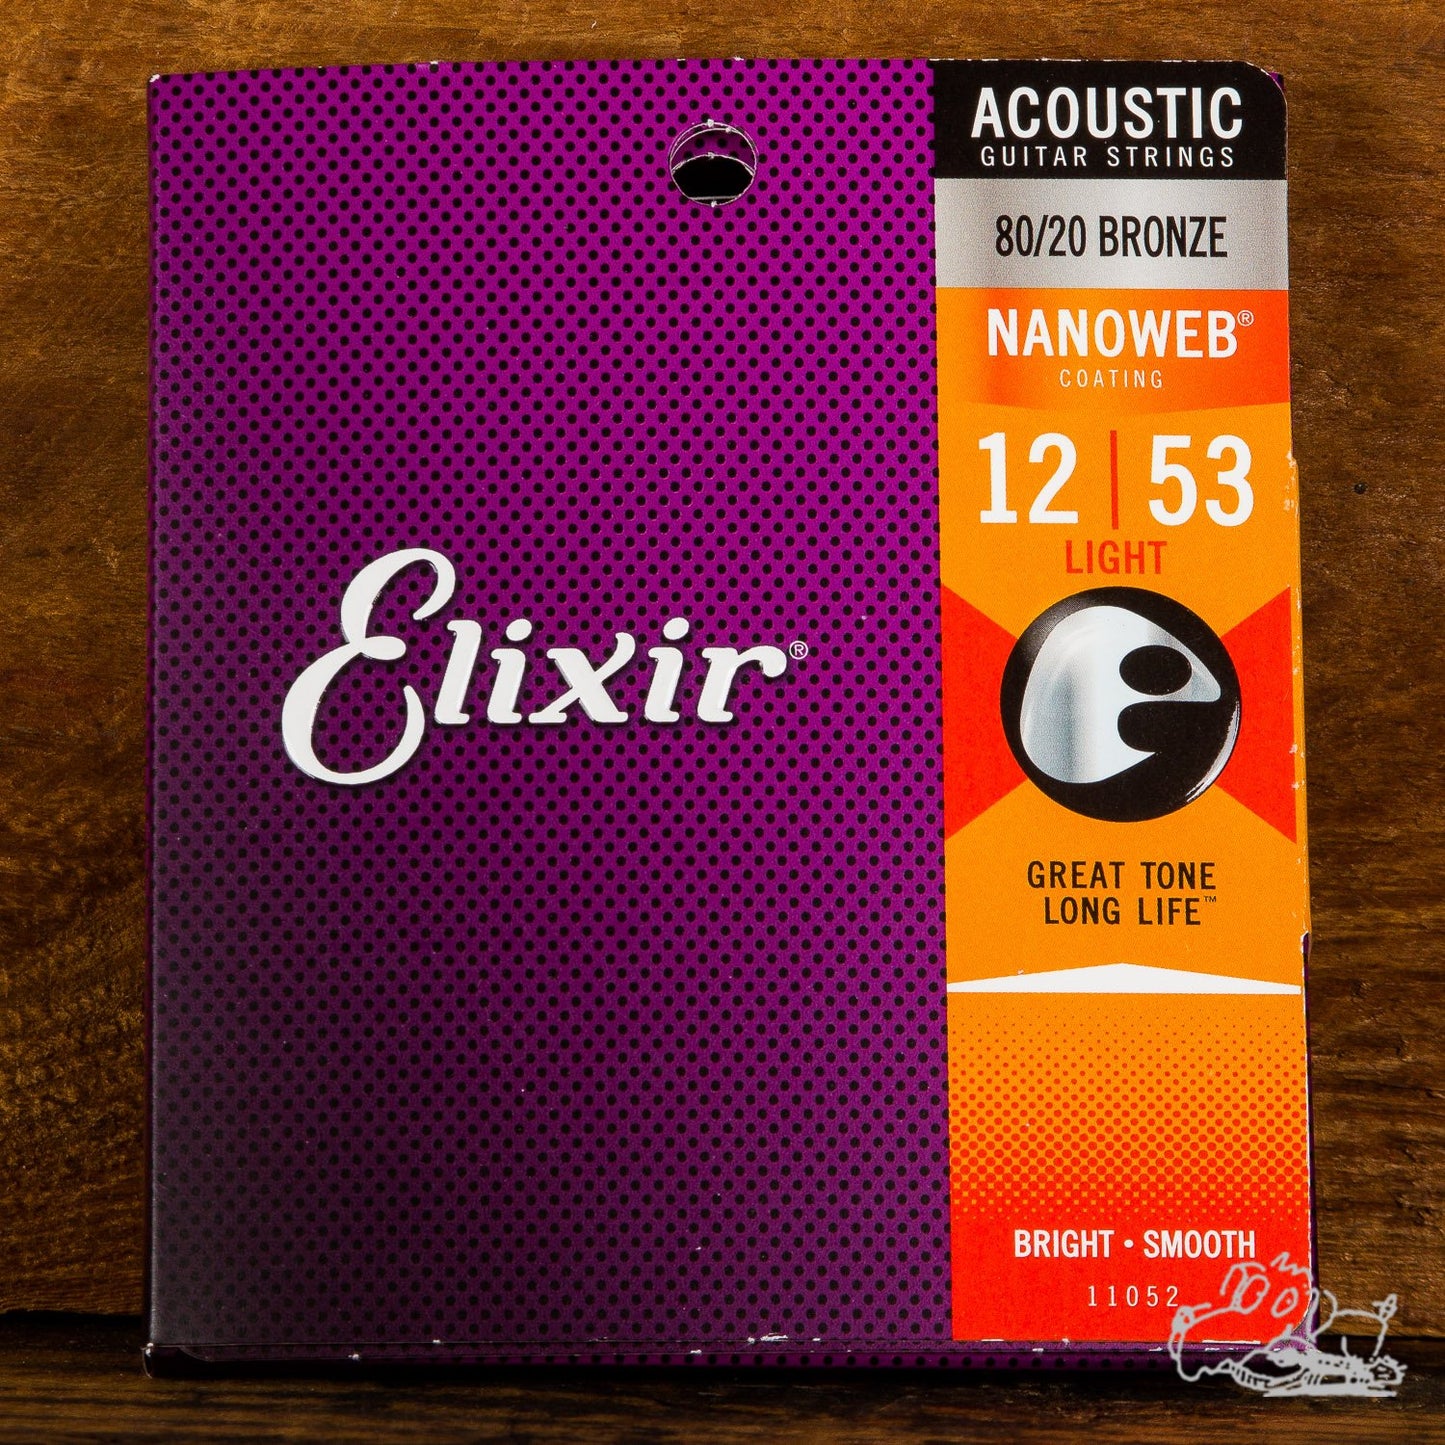 Elixir Nanoweb Coating Acoustic Guitar Strings 80/20 Bronze Light 12-53